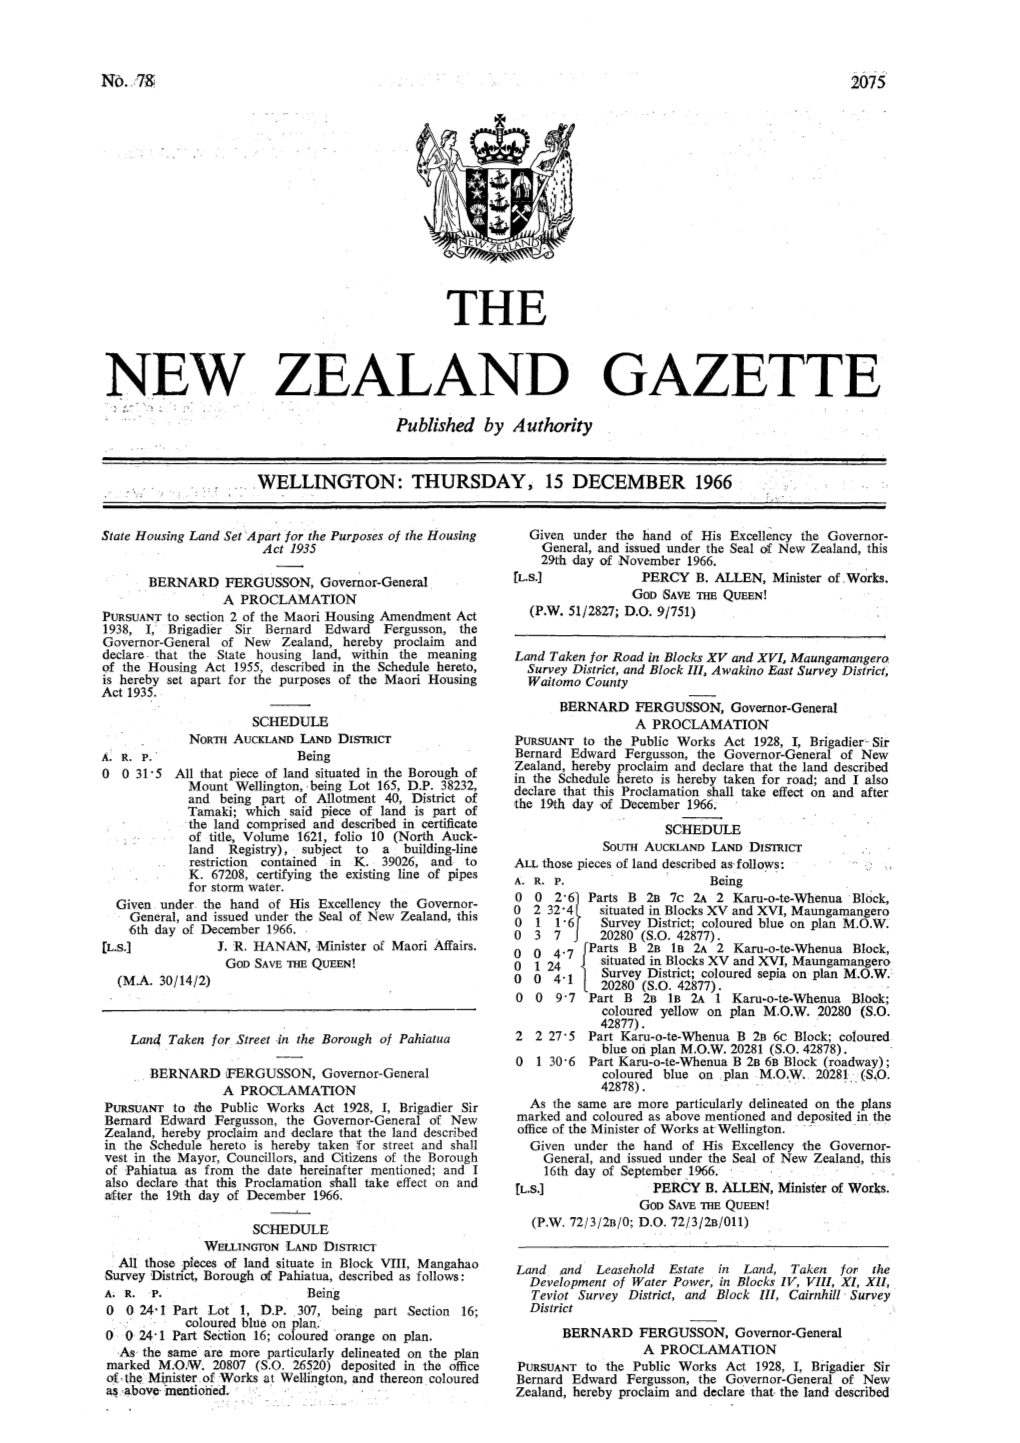 No 78, 15 December 1966, 2075